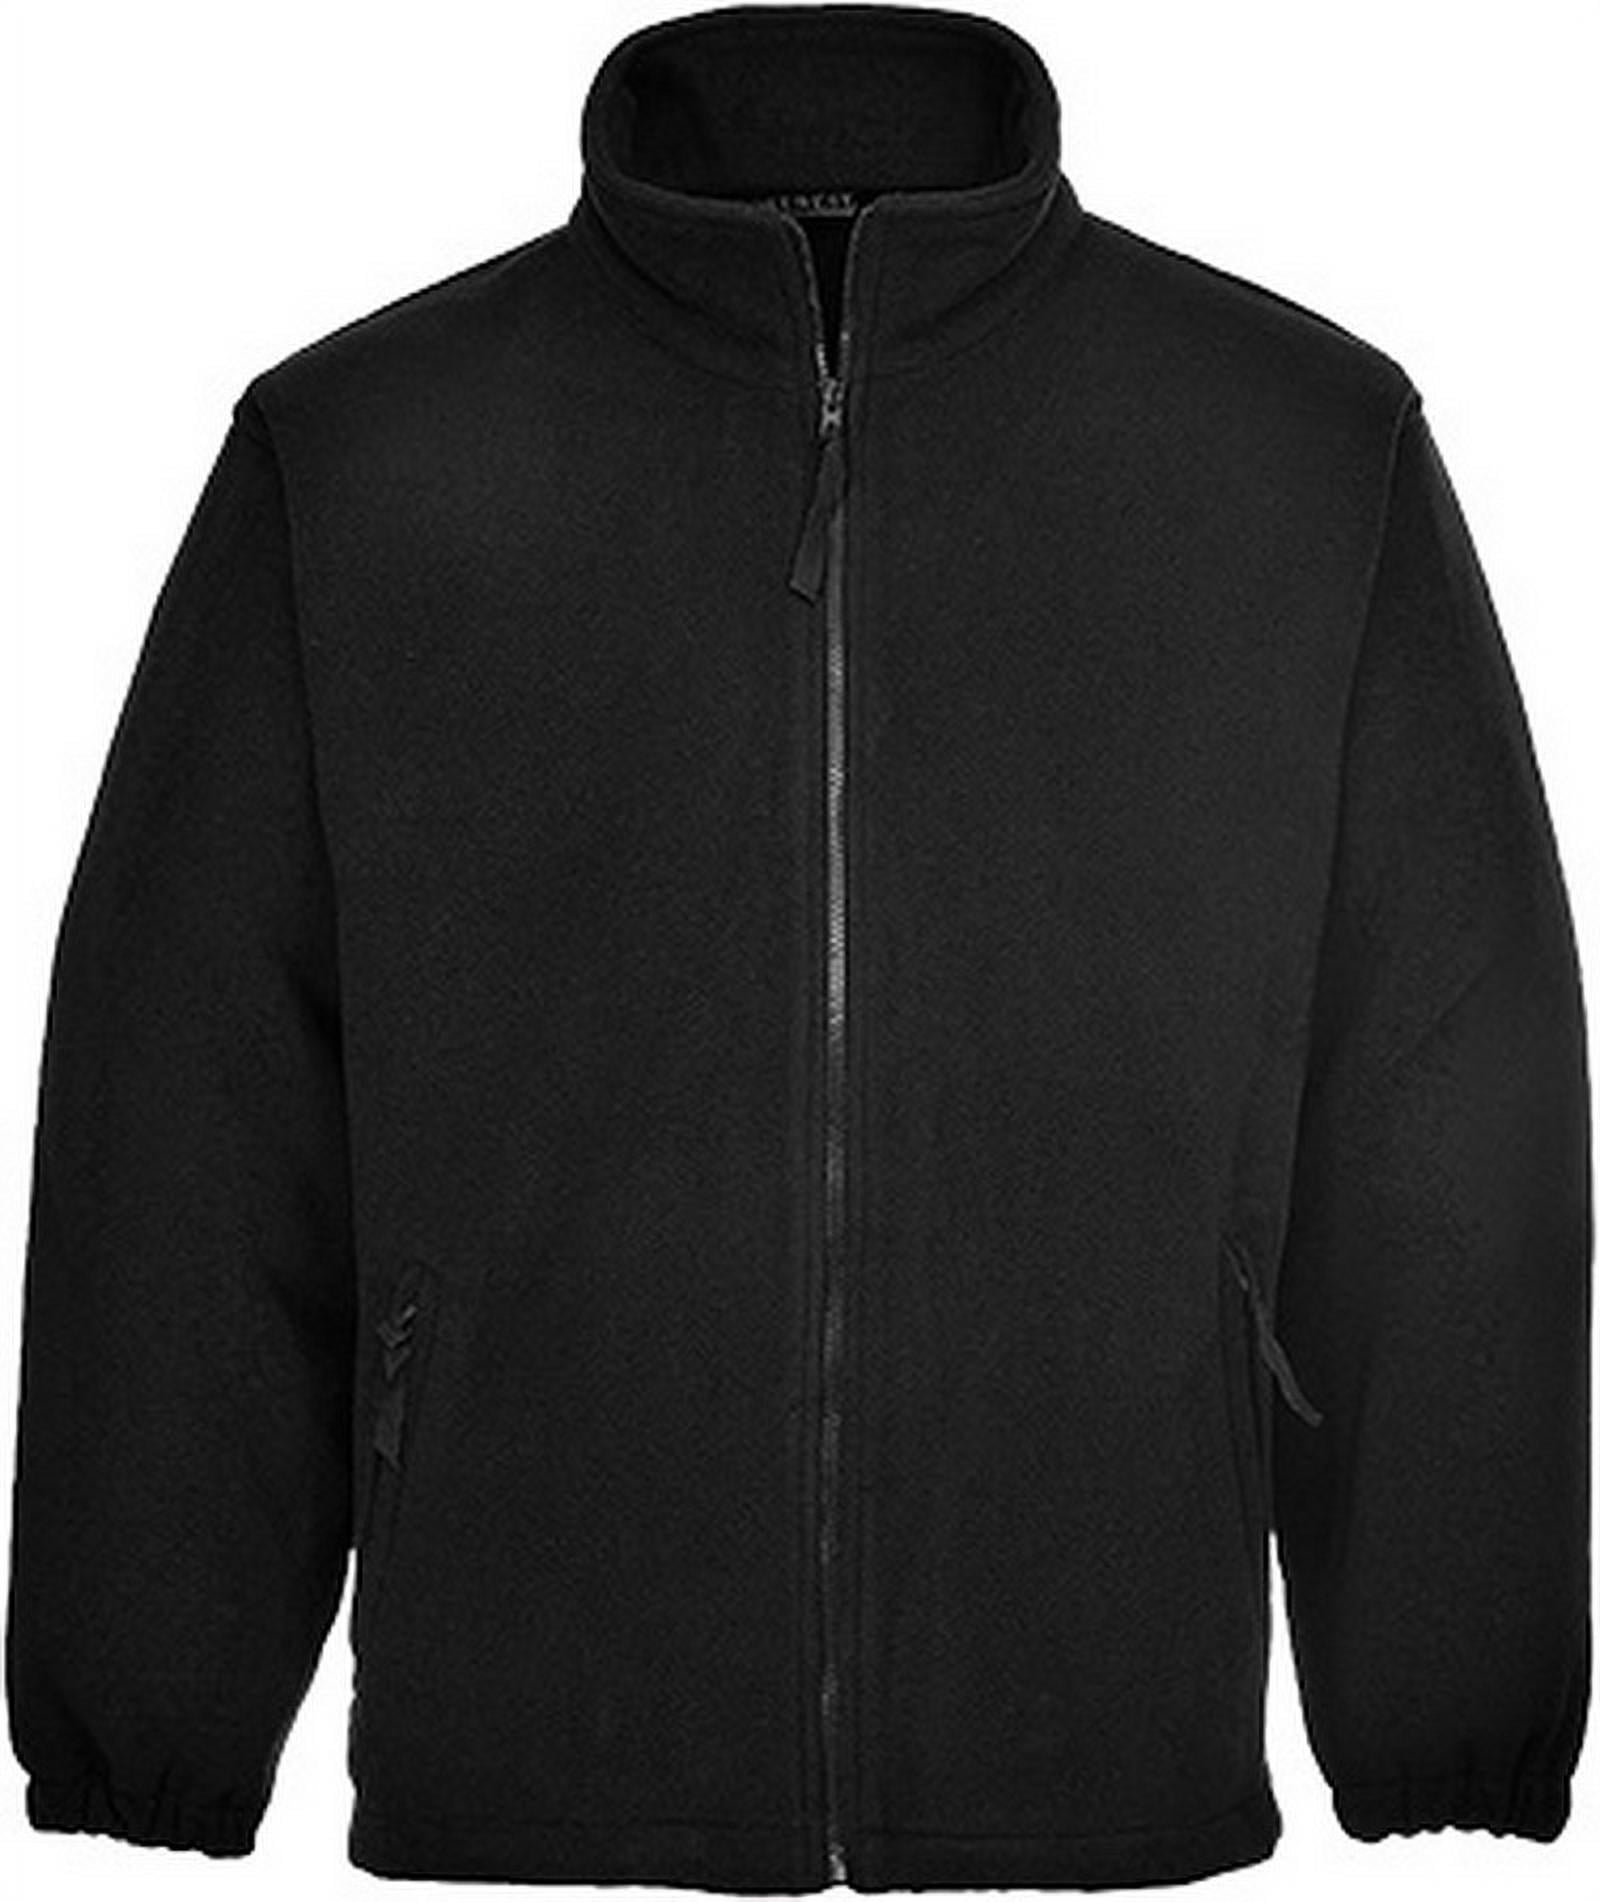 Portwest Aran Fleece Jacket Coat Winter Jumper Zipped Anti Pill Finish F205 